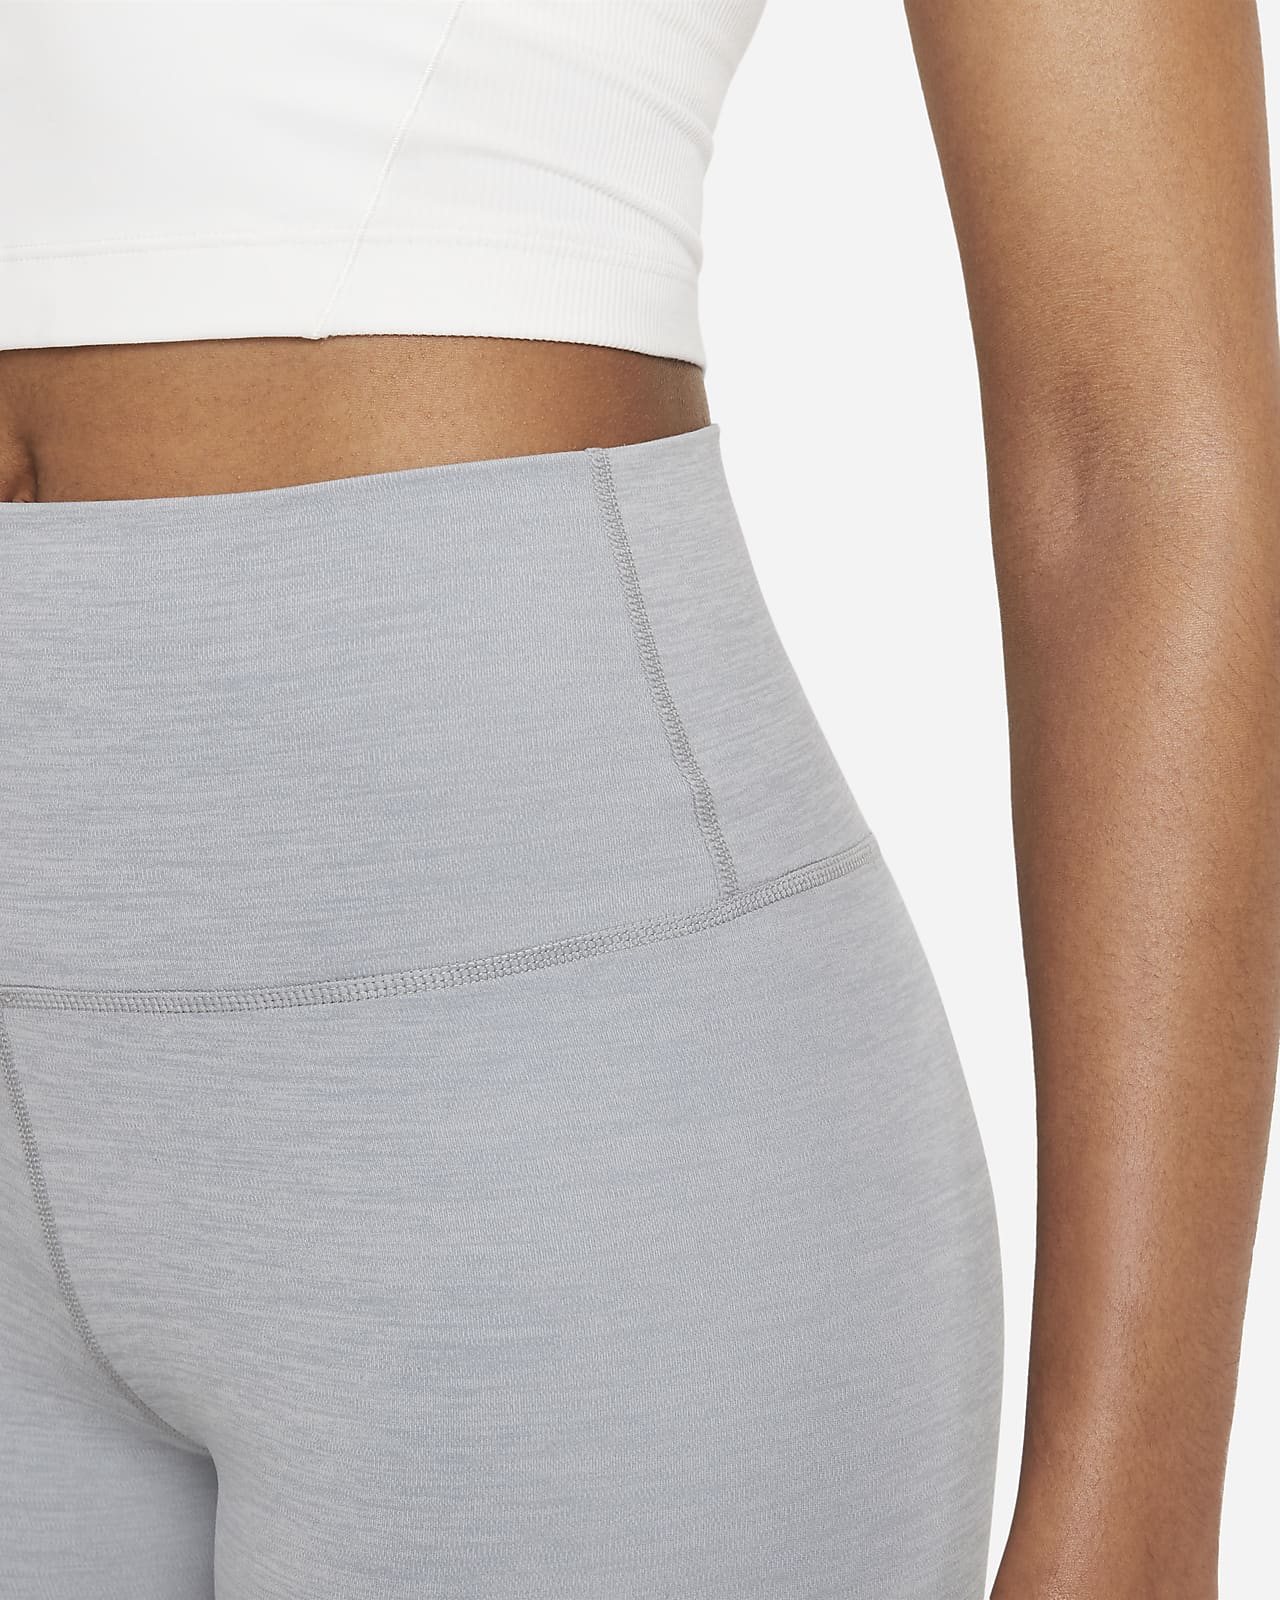 Nike Yoga Luxe Women's High-Waisted Shorts.